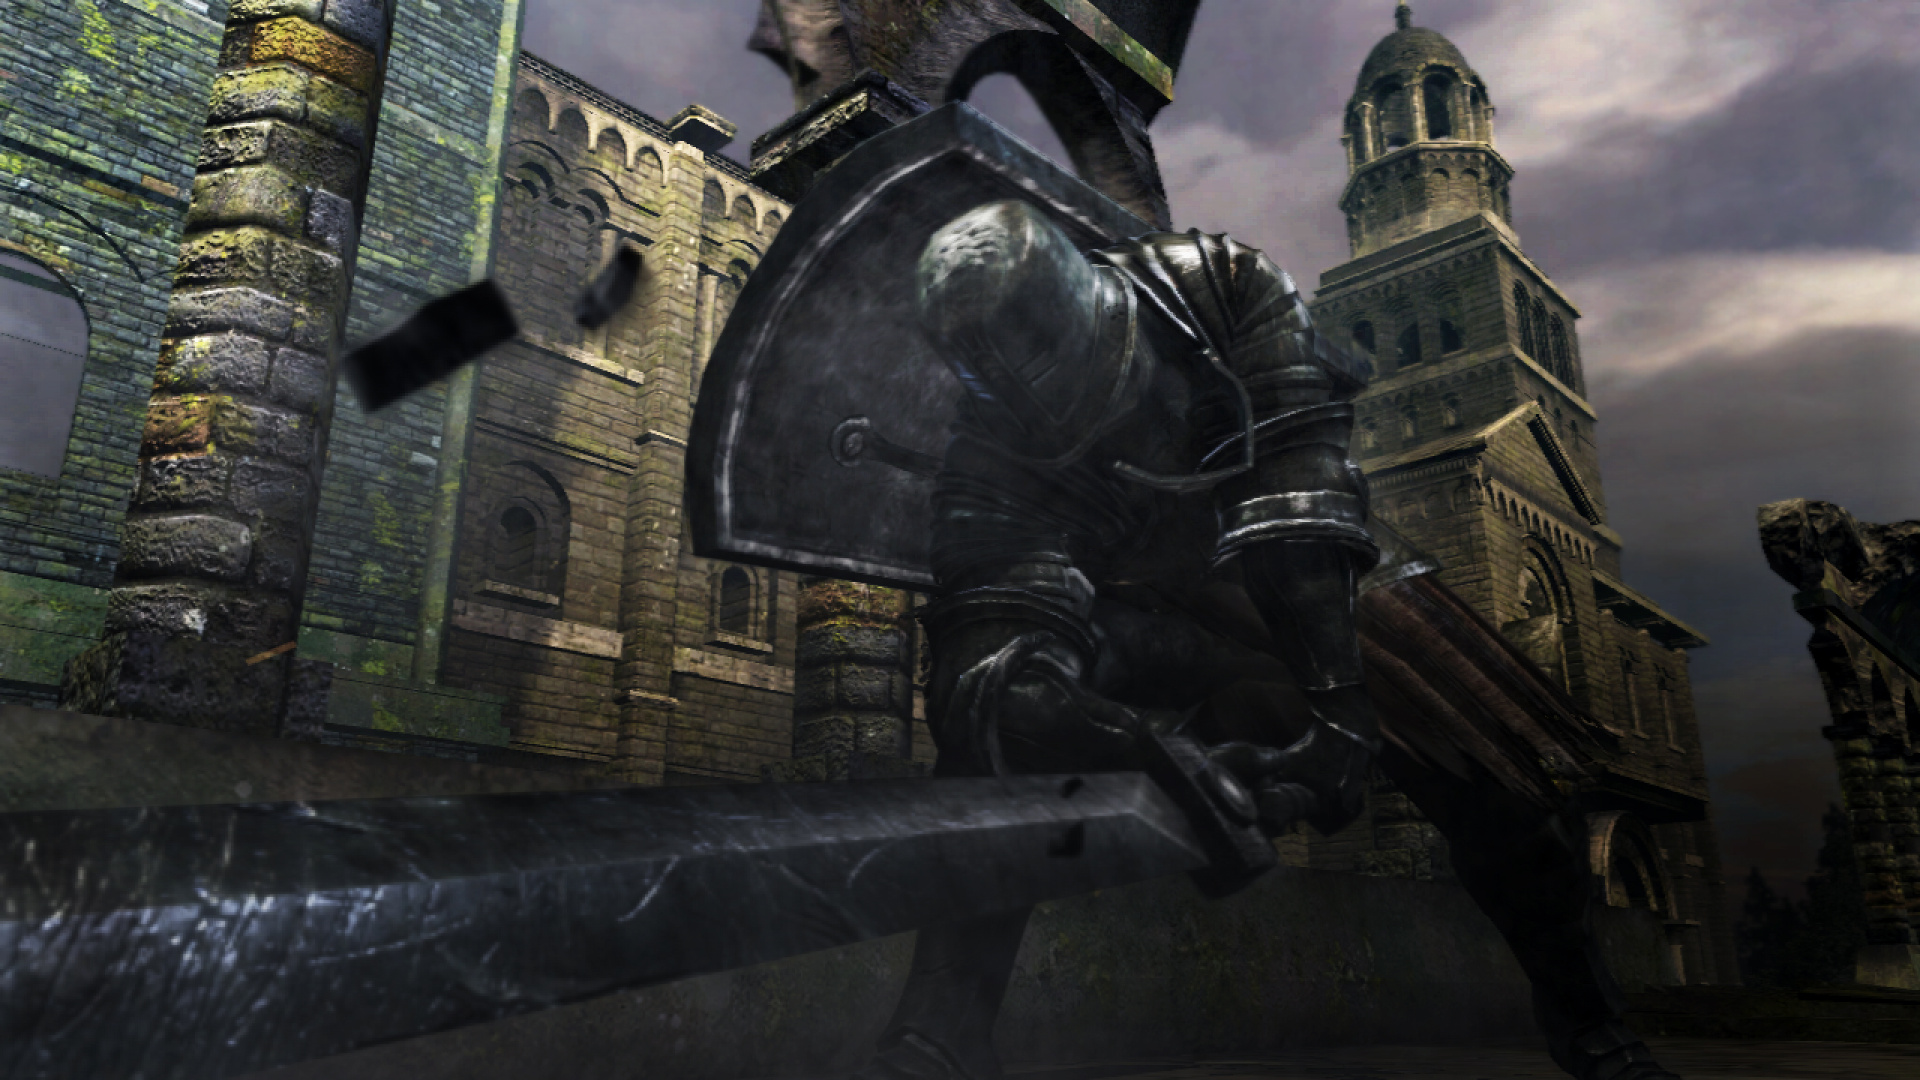 Dark Souls (PS3 / PlayStation 3) Game Profile | News, Reviews, Videos